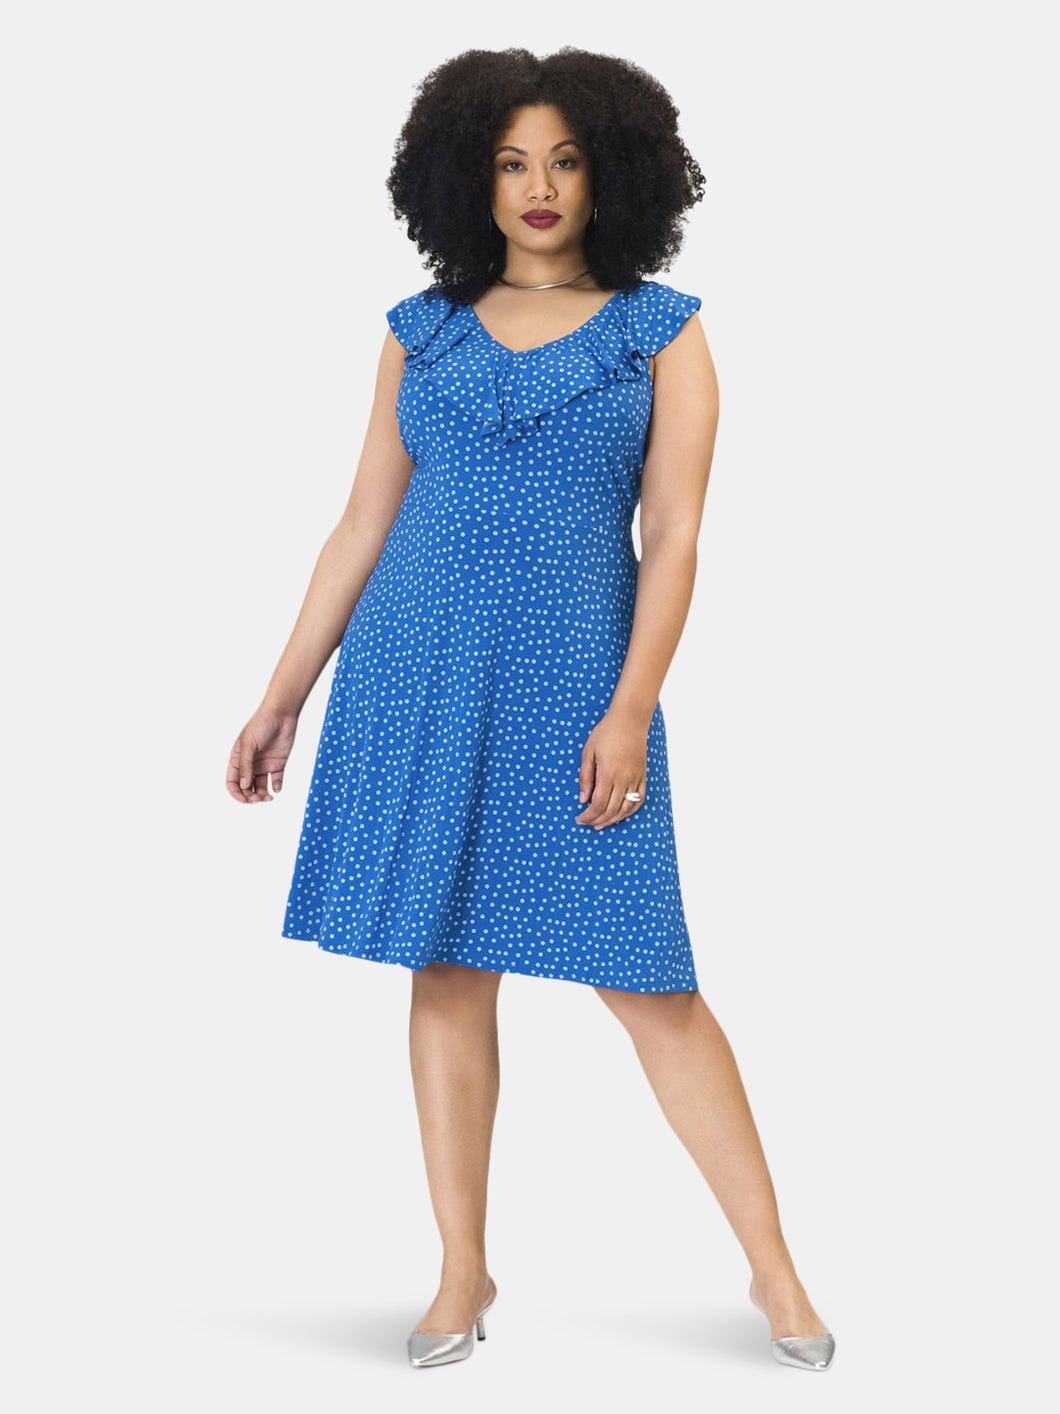 Chloe Short Sleeve A-Line Dress in Confetti Dot Nebulas Blue (Curve)